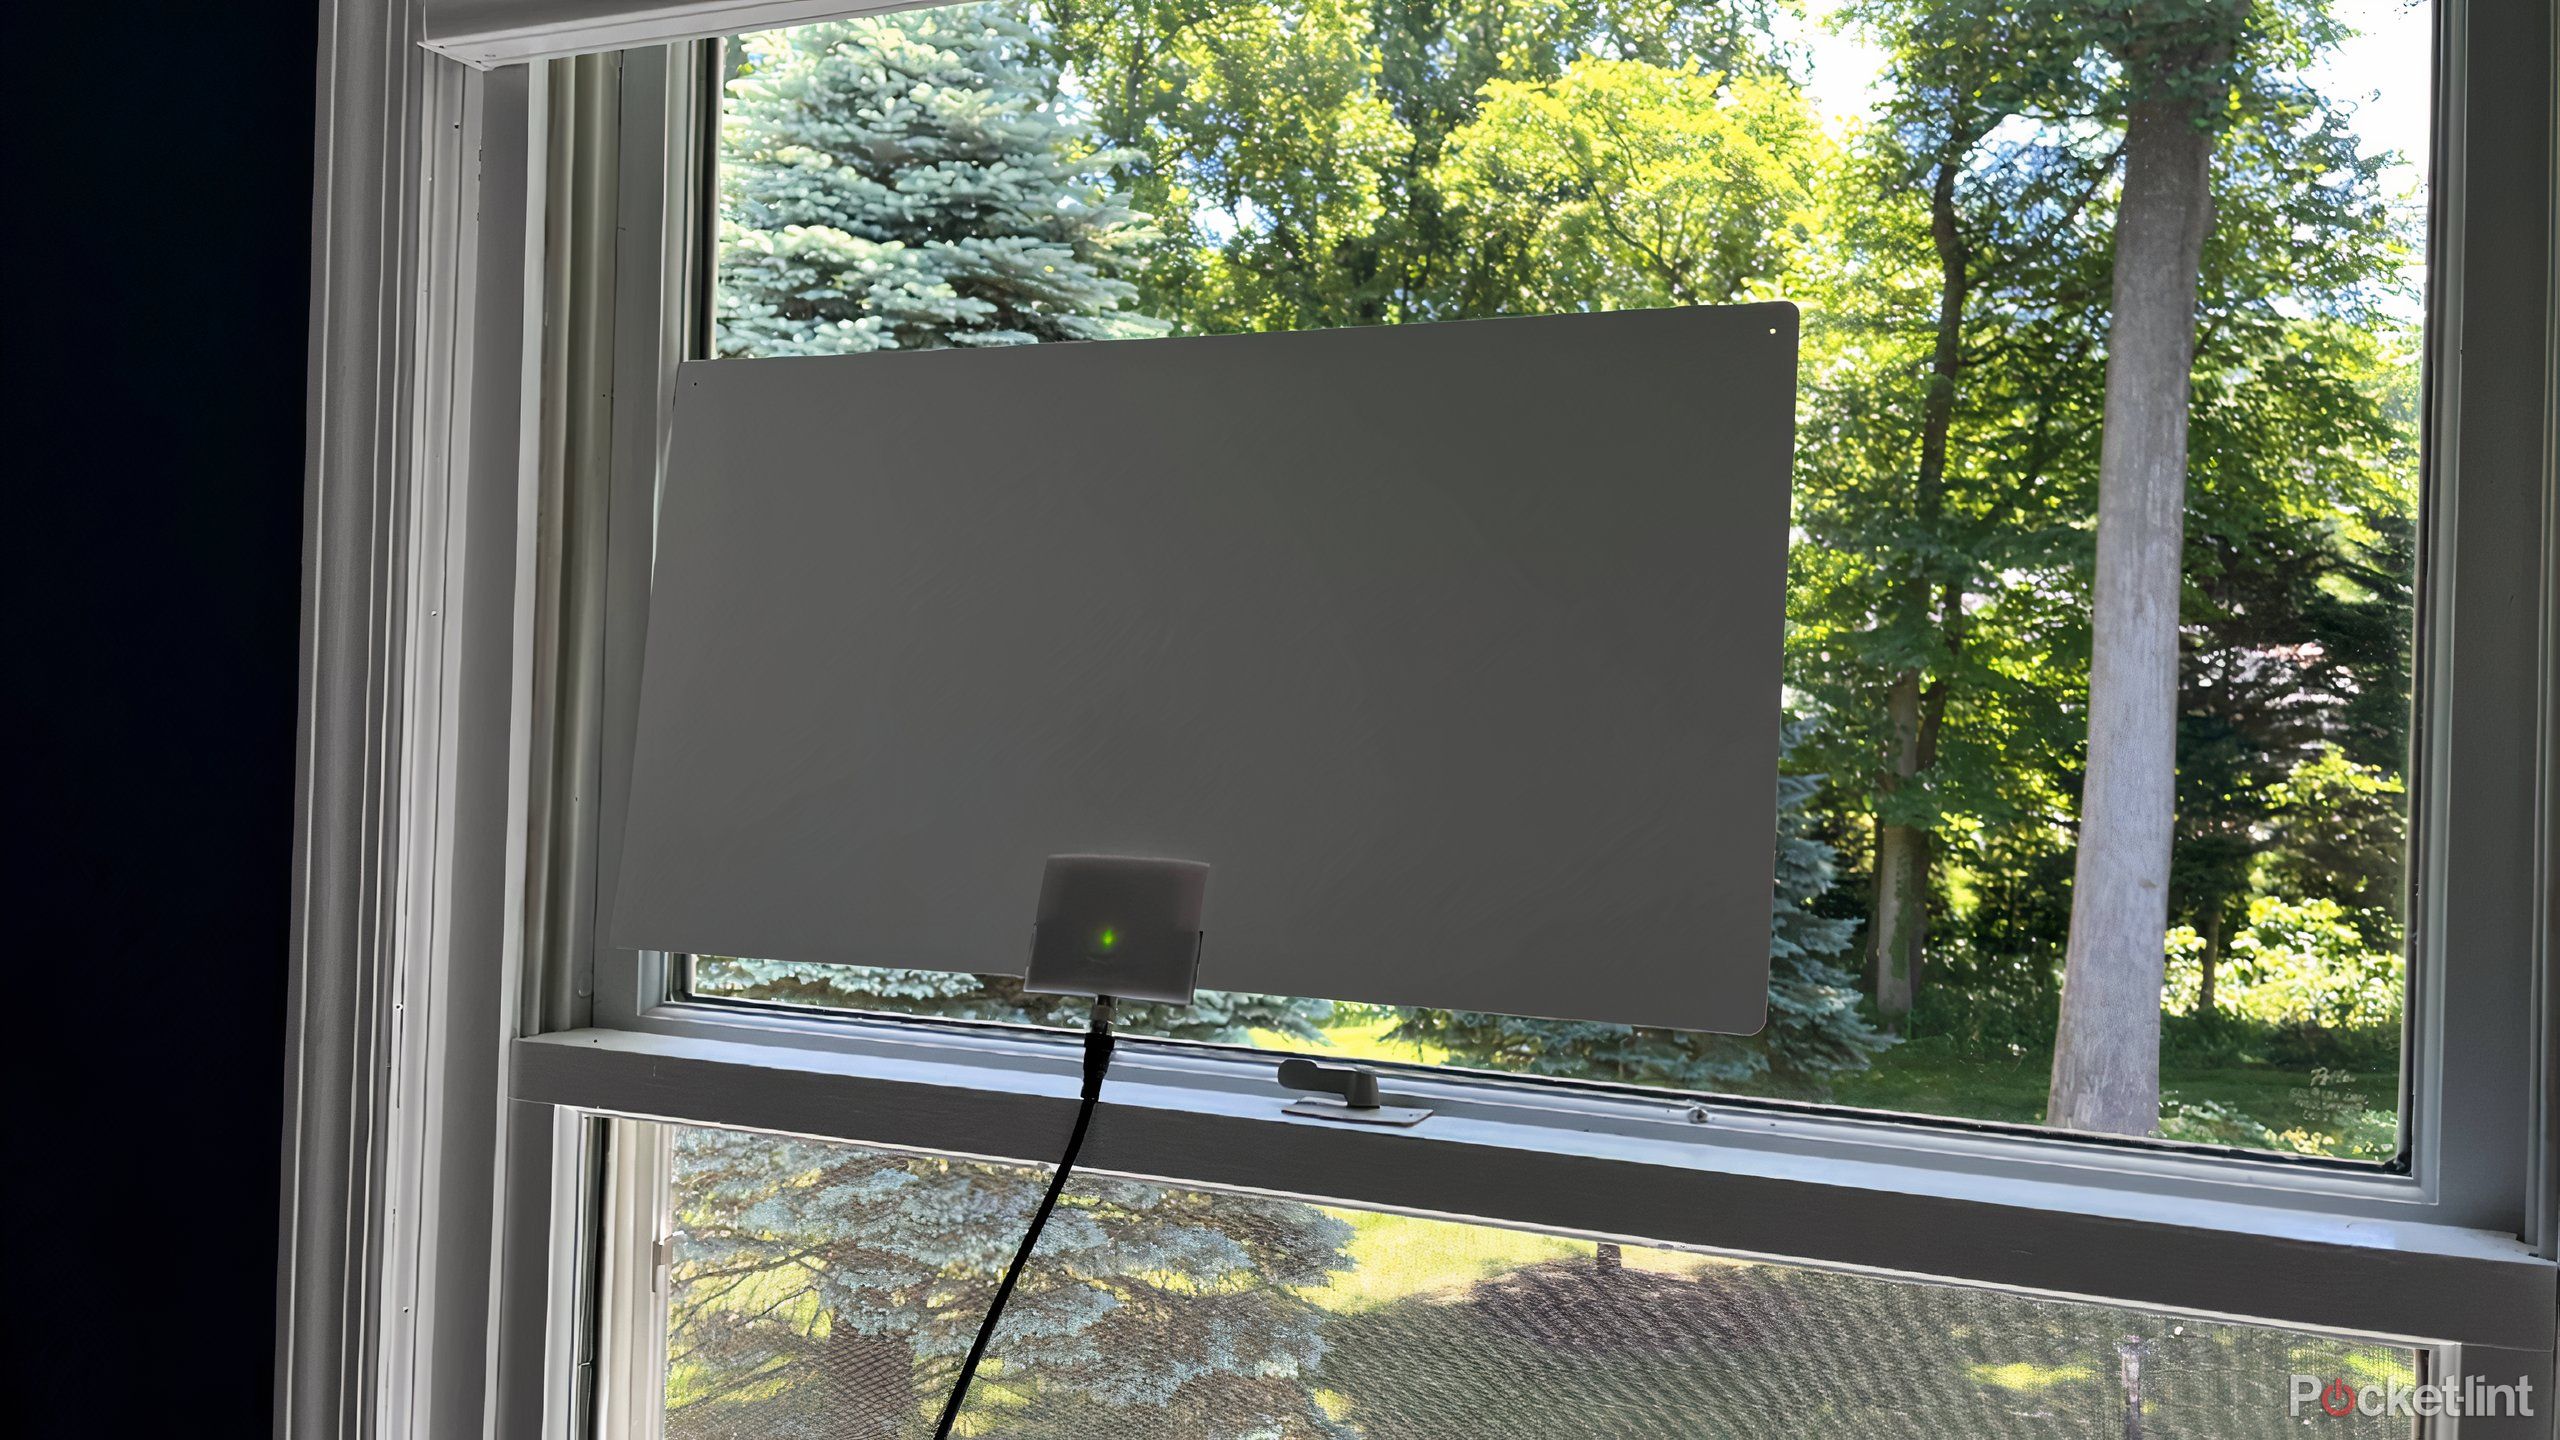 mohu leaf supreme pro digital tv antenna in a window